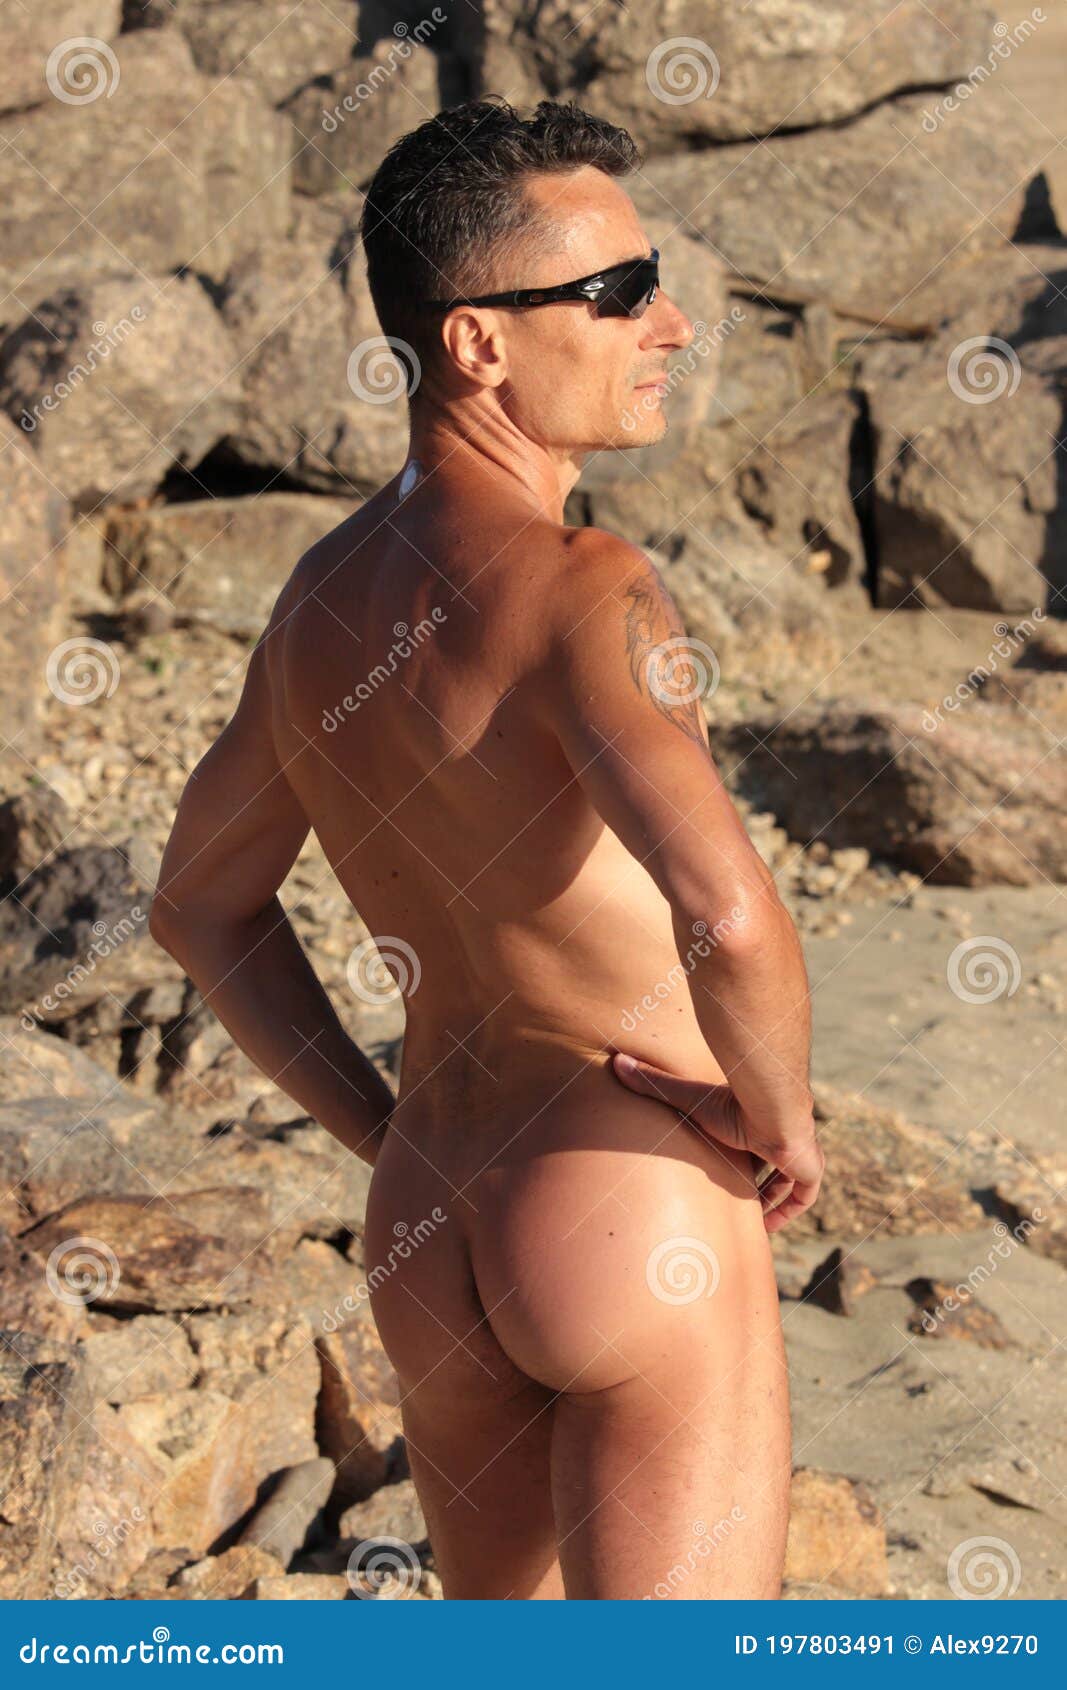 ameris hankerson add photo skinny nude man